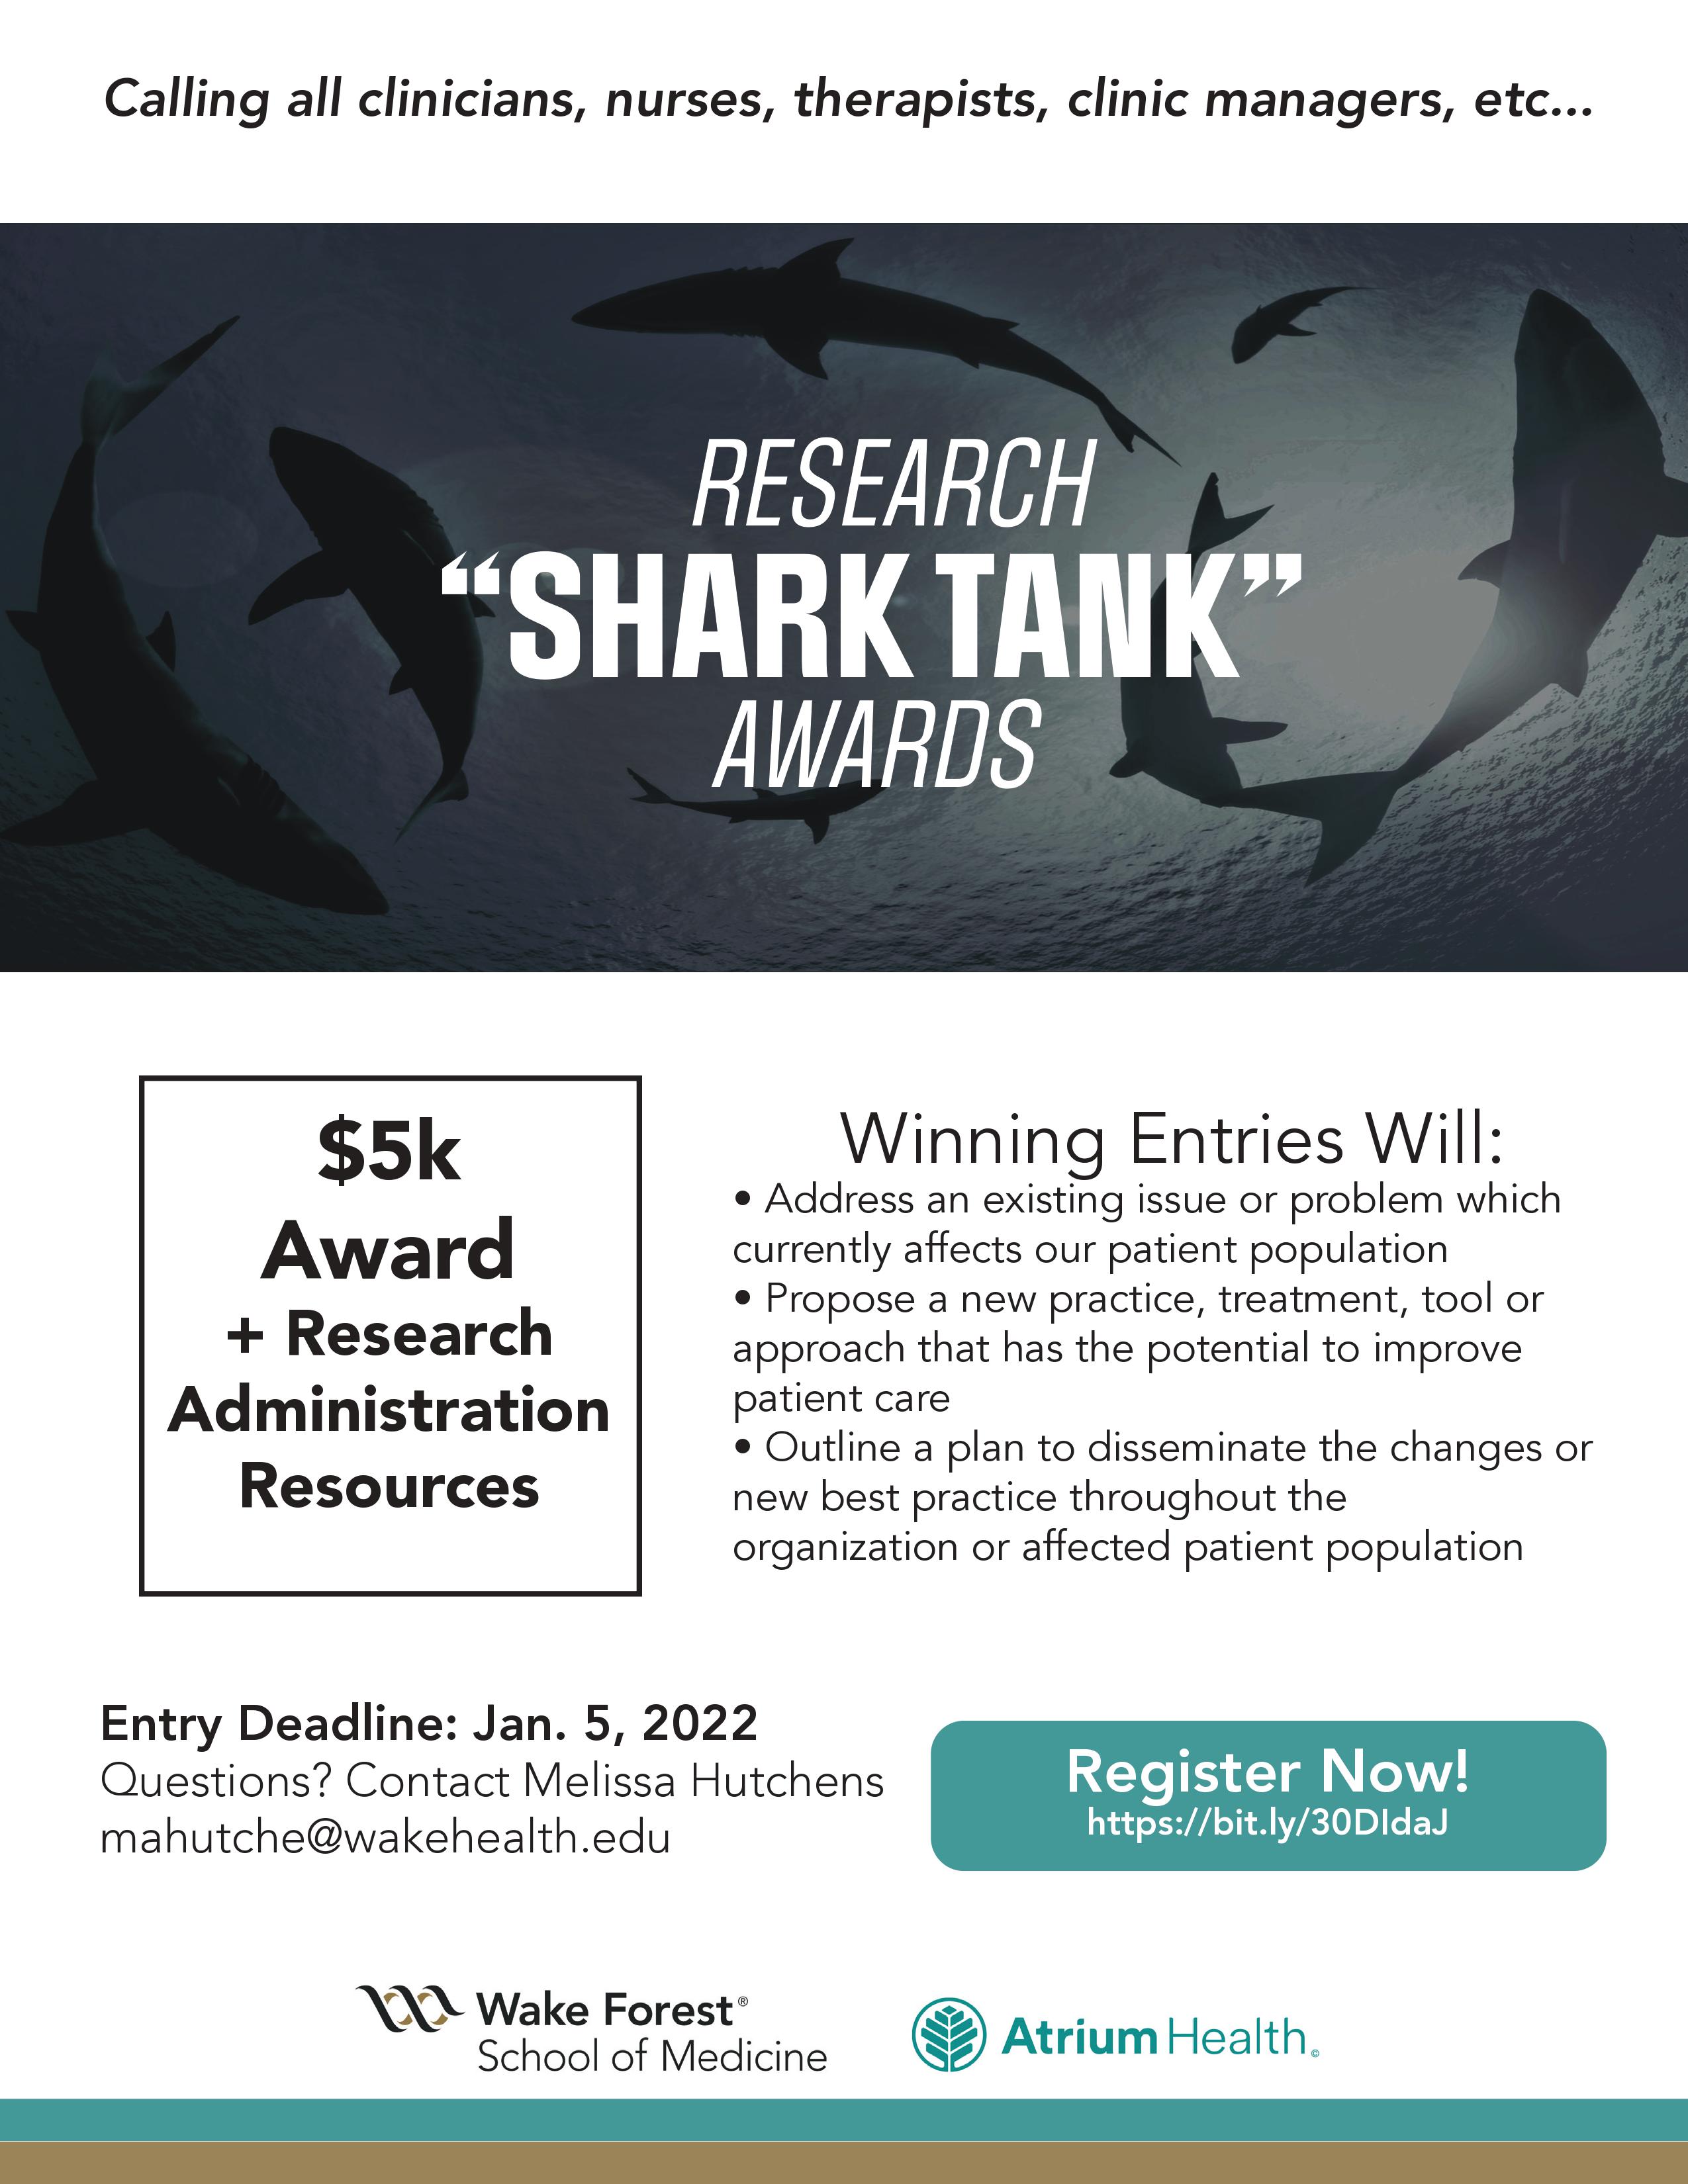 Research 'Shark Tank' Awards Flyer Jan 2022